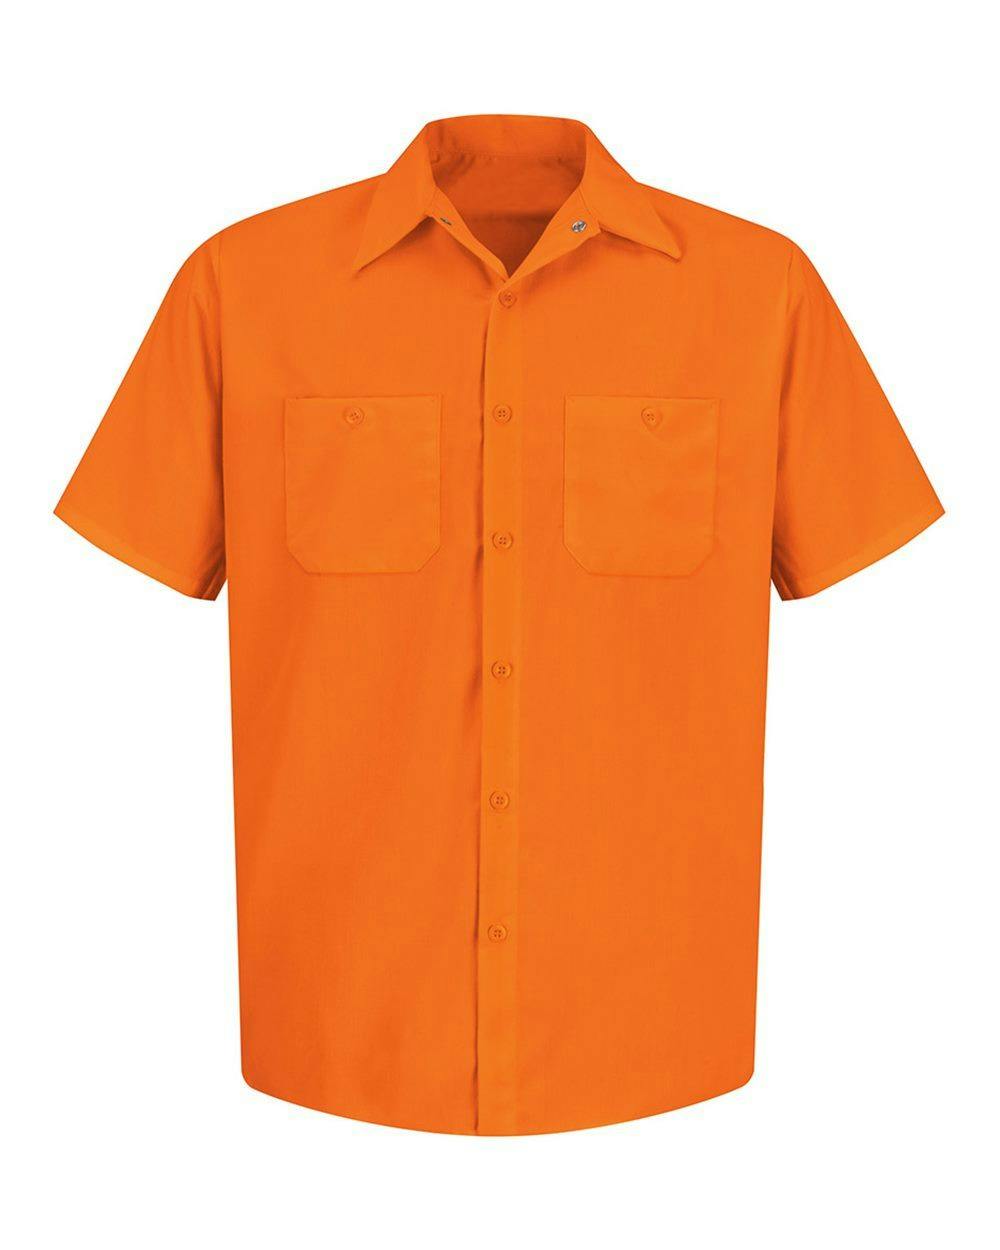 Image for Enhanced Visibility Short Sleeve Work Shirt - SS24